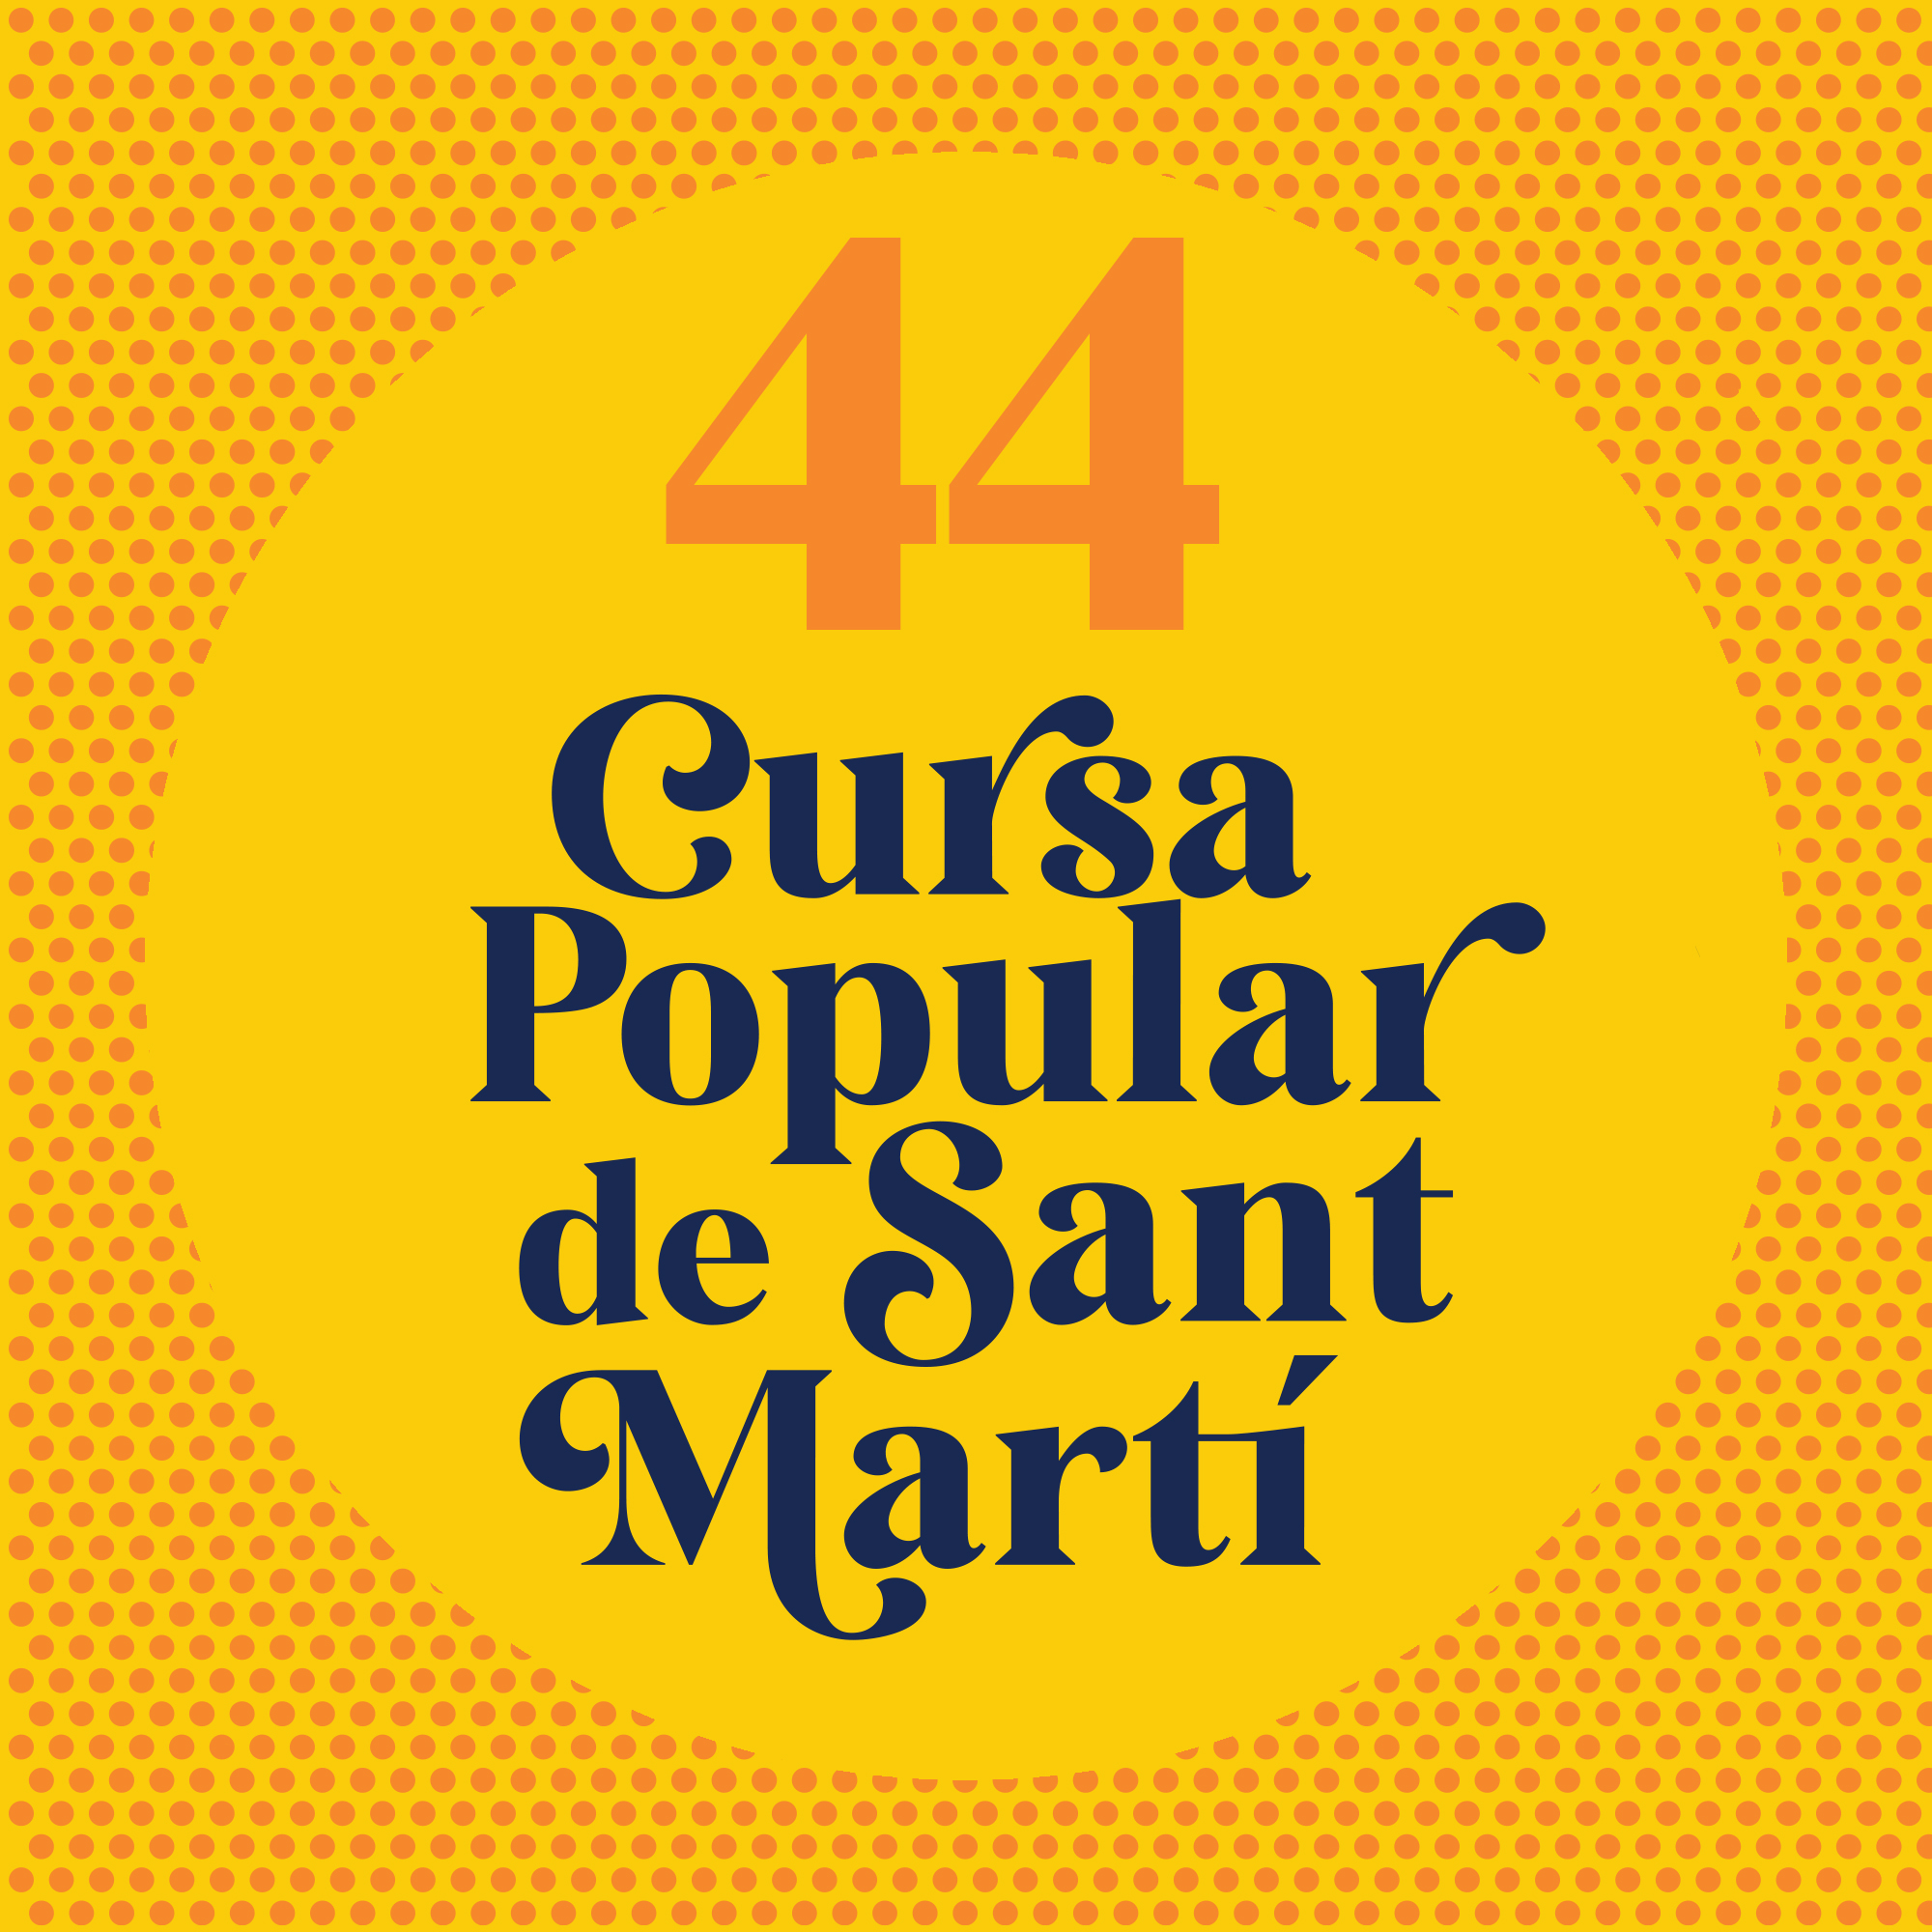 Cursa Popular de Sant Martí